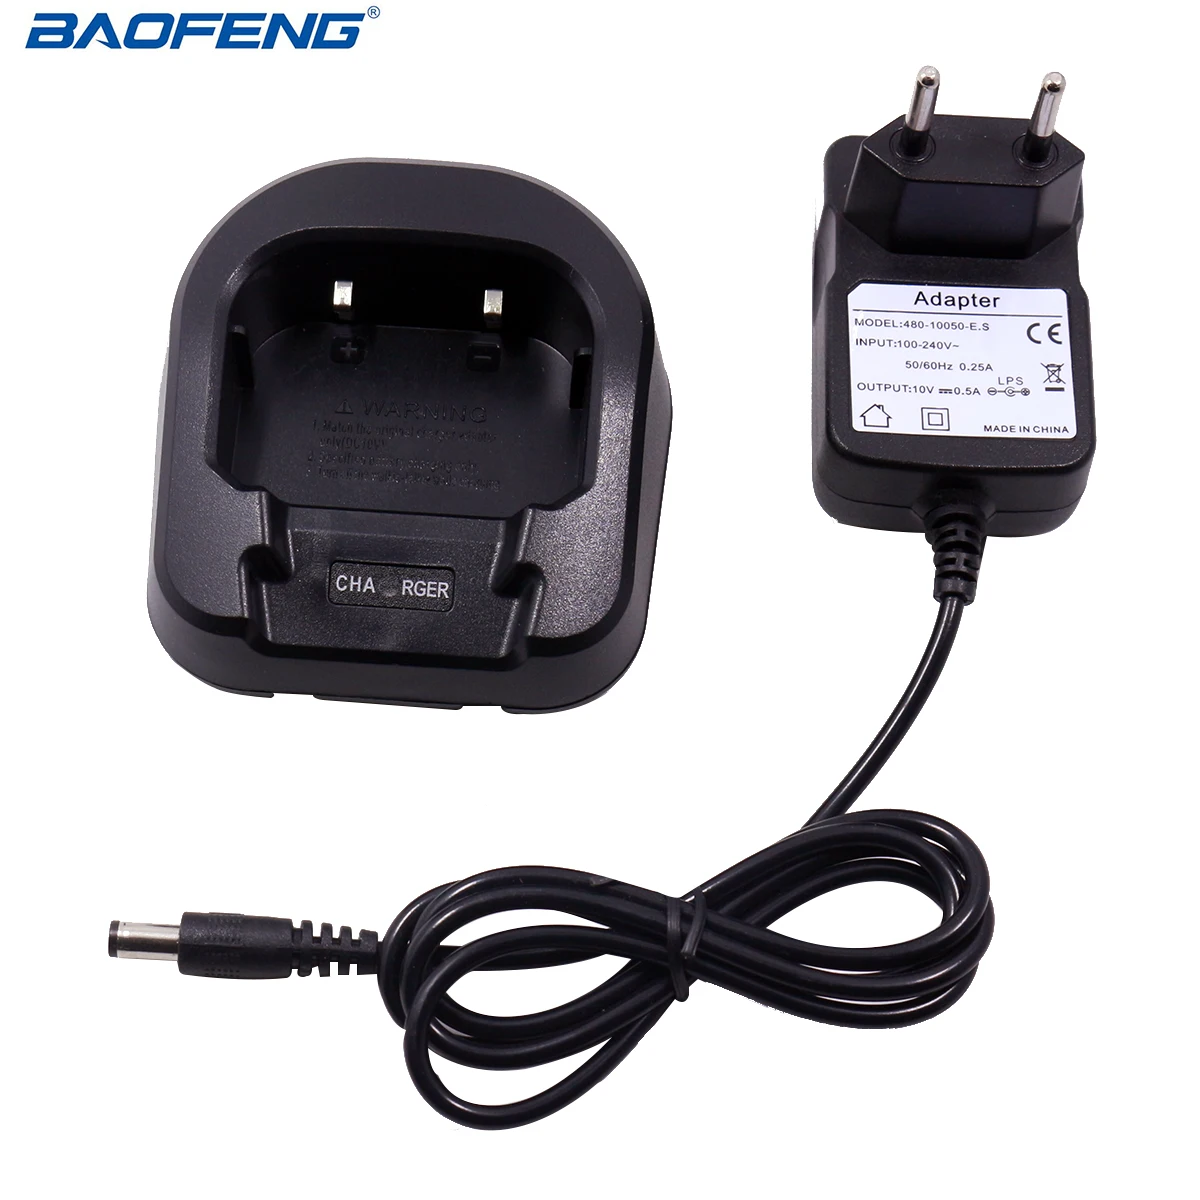 Awen+® Car Charger Battery Eliminator Adaptor for BaoFeng Pofung Handheld Two Way Radio UV-89 UV-82 UV-82L UV-82HP UV-82C